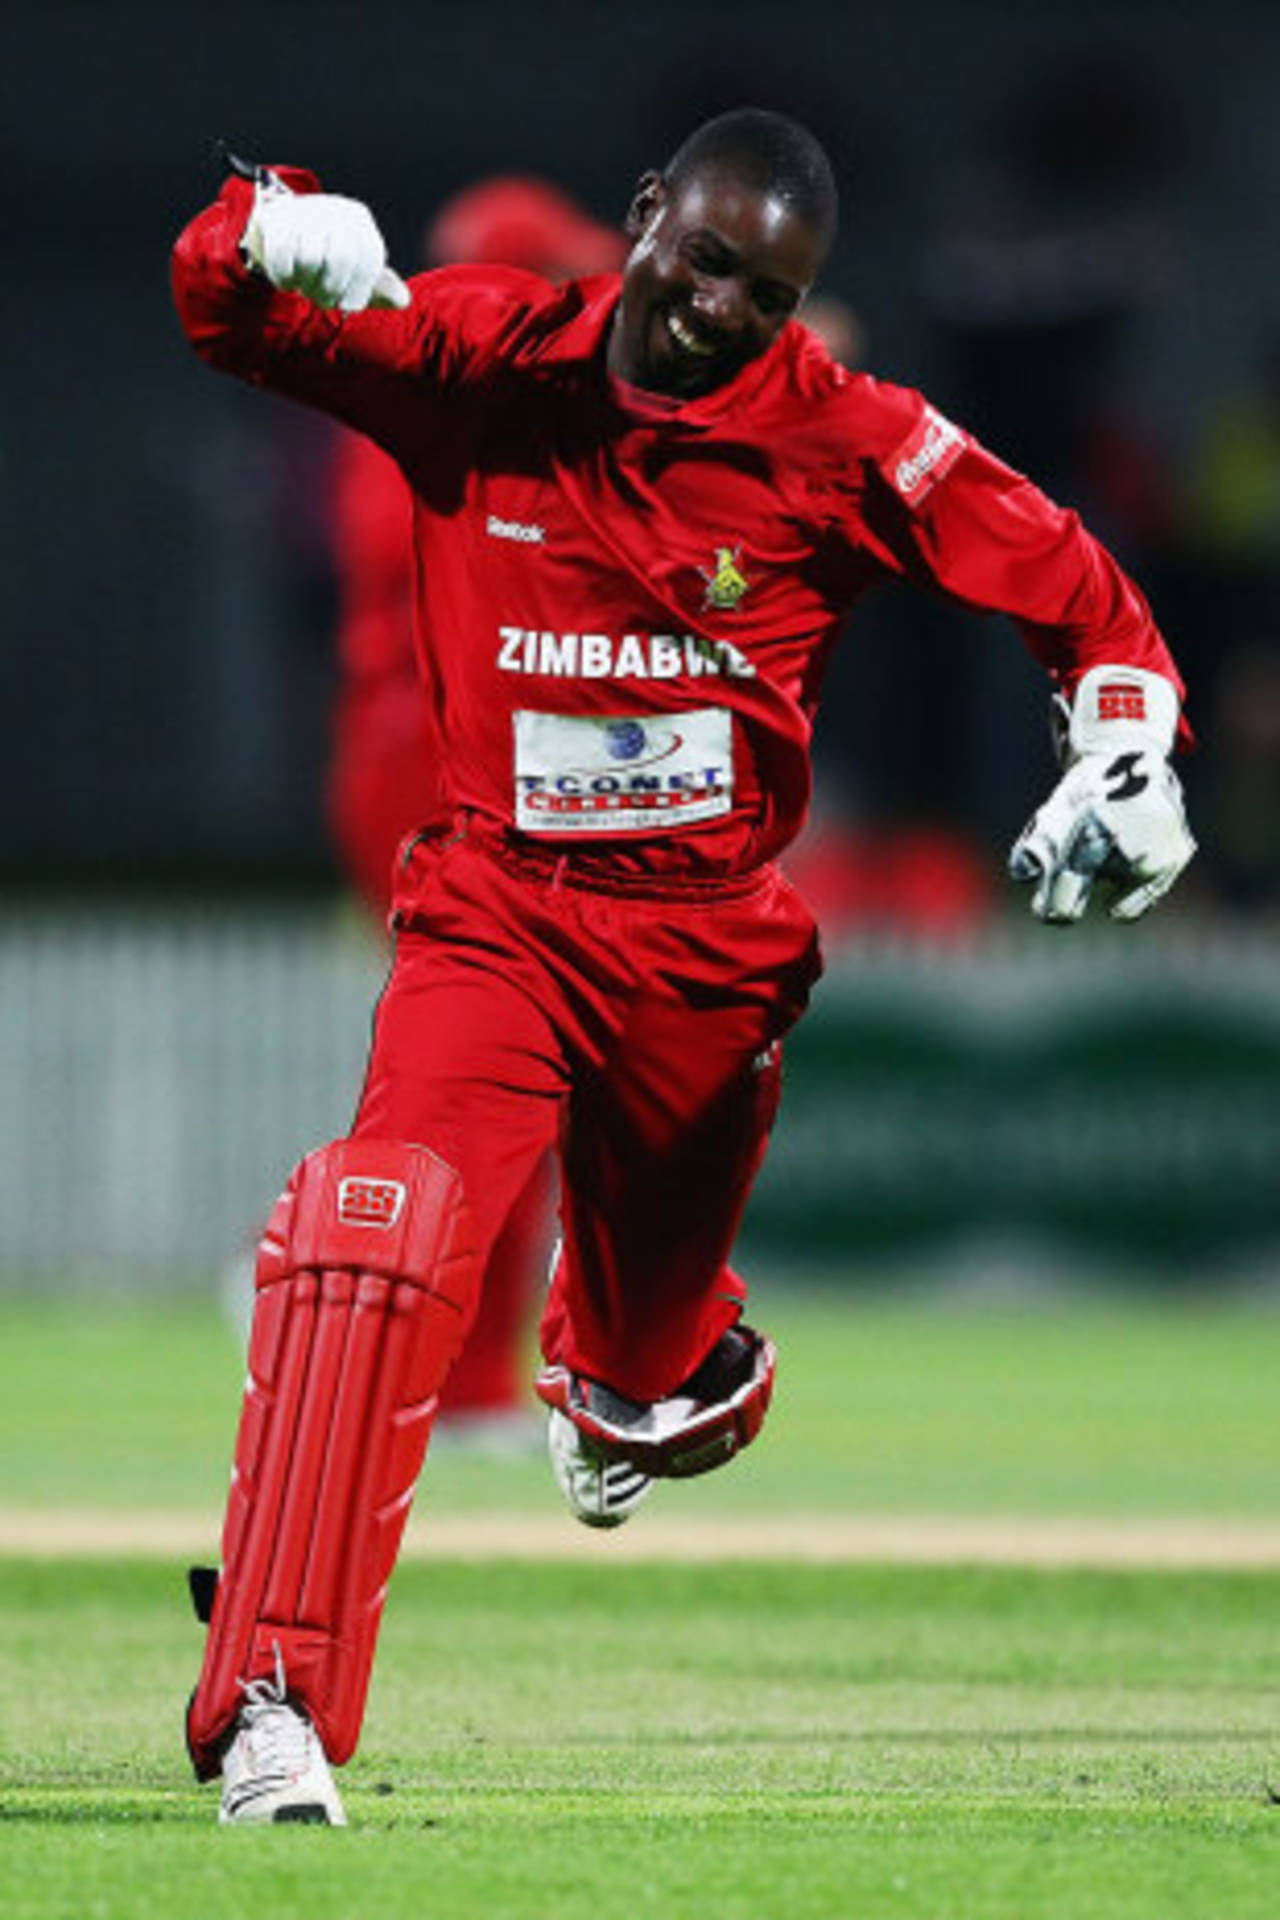 Tatenda Taibu is thrilled after James Franklin is run out, New Zealand v Zimbabwe, 2nd Twenty20 international, Hamilton, February 14, 2012 